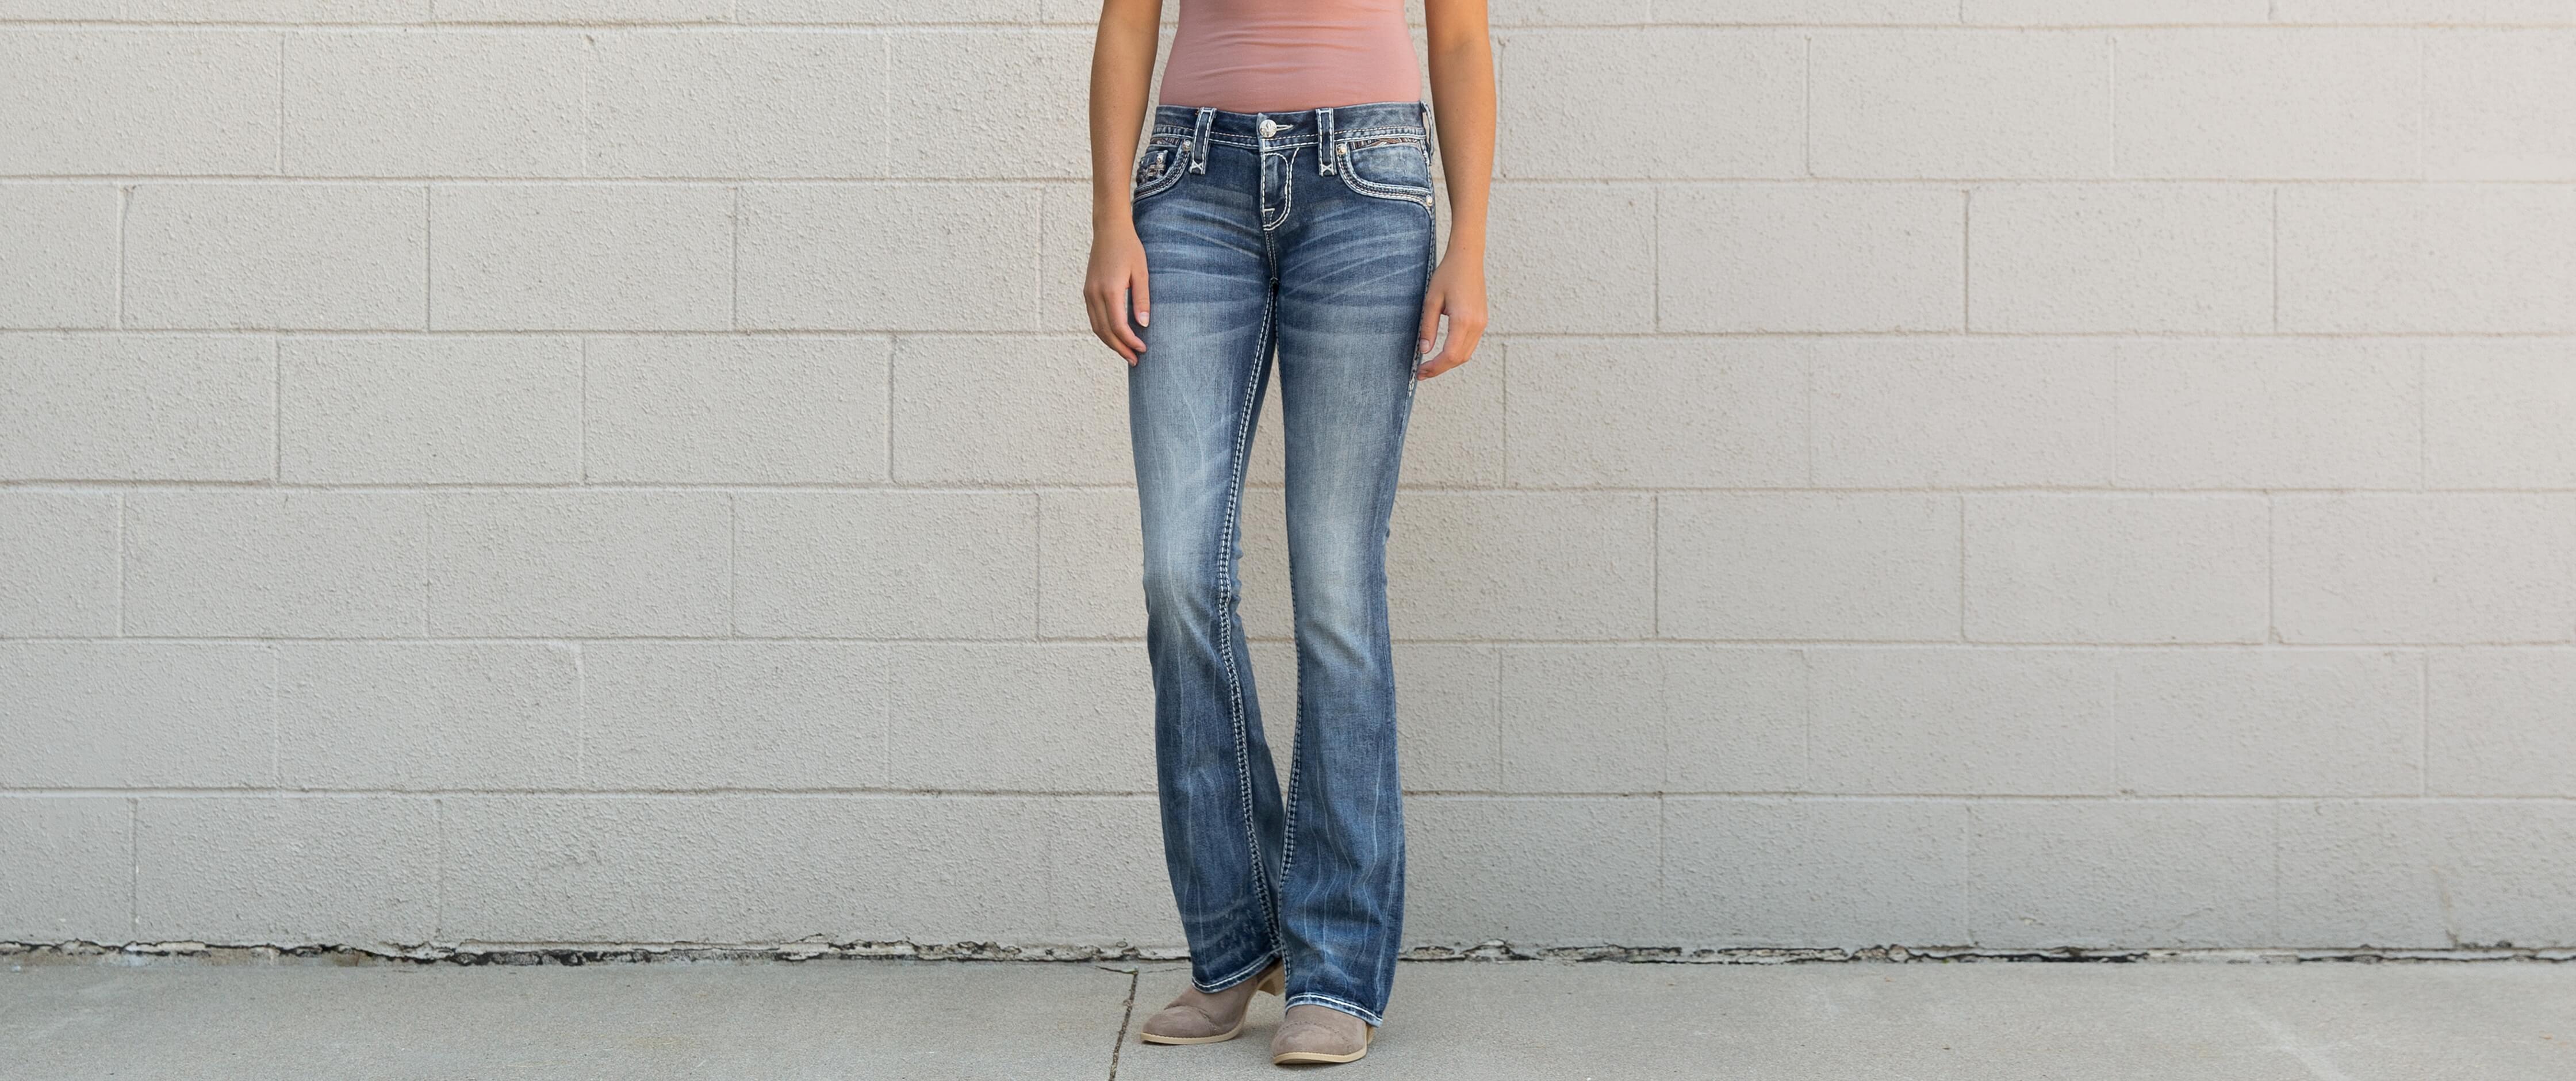 rock revival jeans women's bootcut